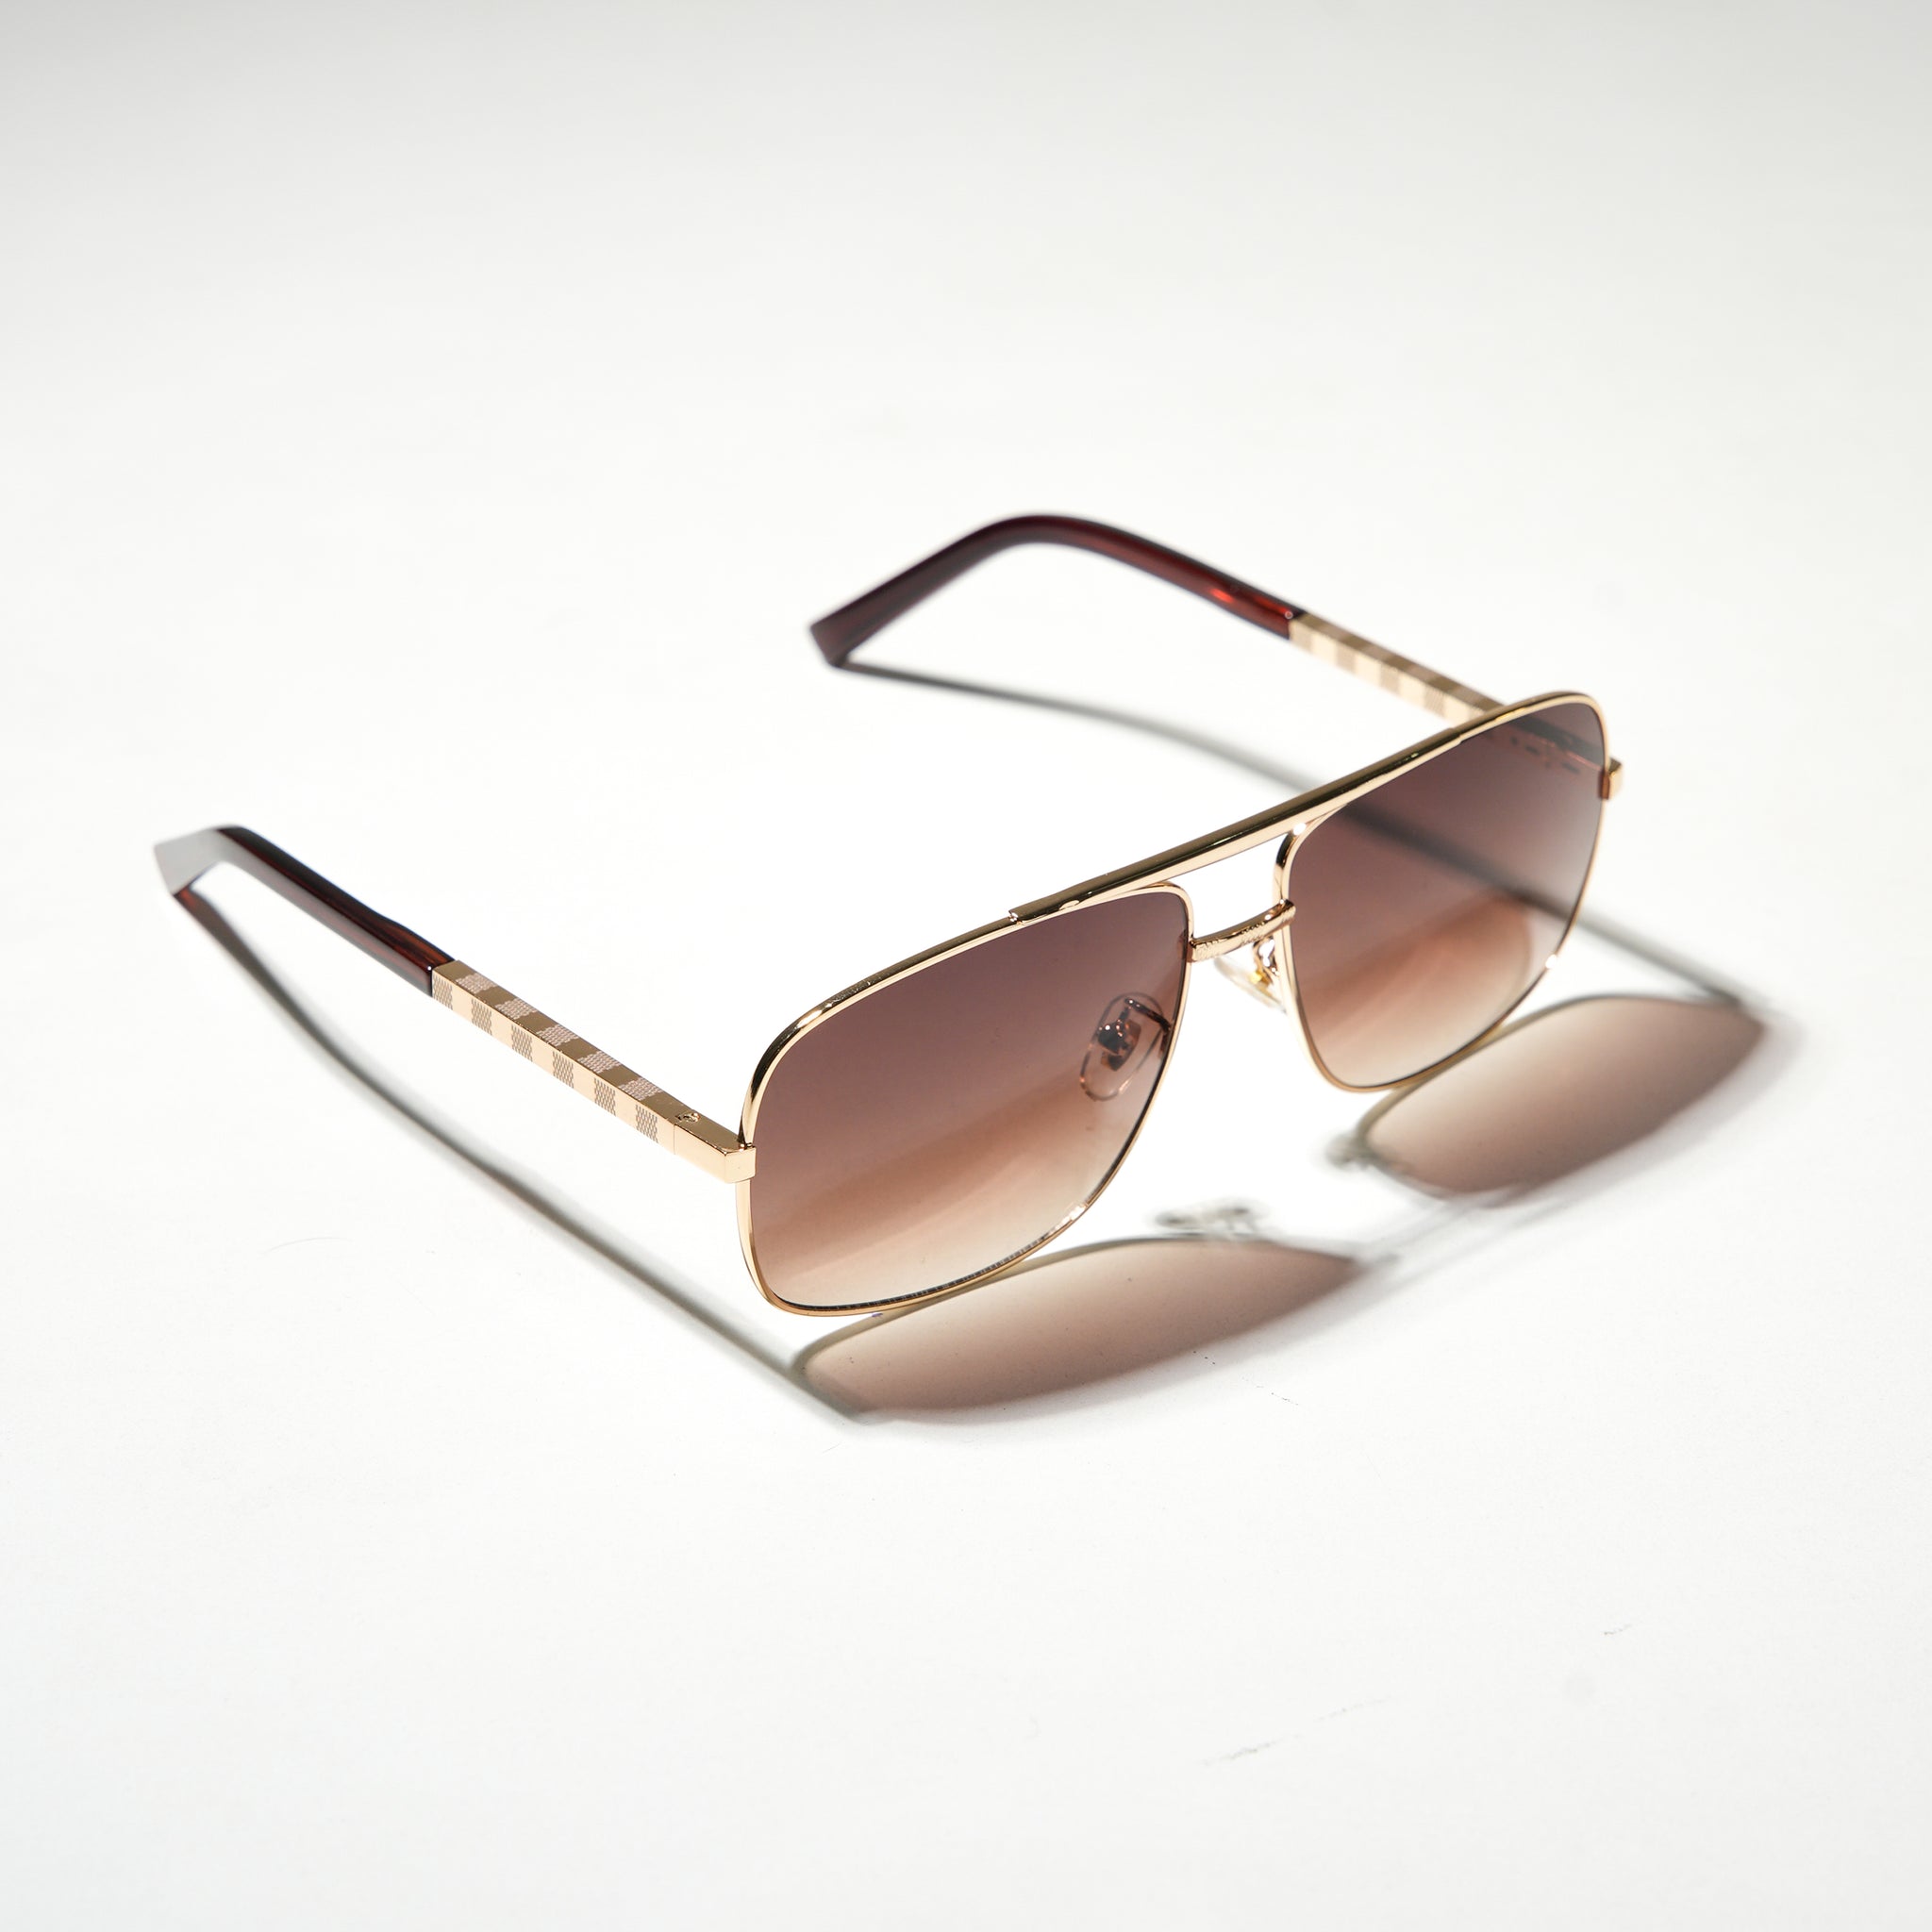 Chokore Retro Double Bridge Sunglasses with UV400 Protection (Brown & Gold)